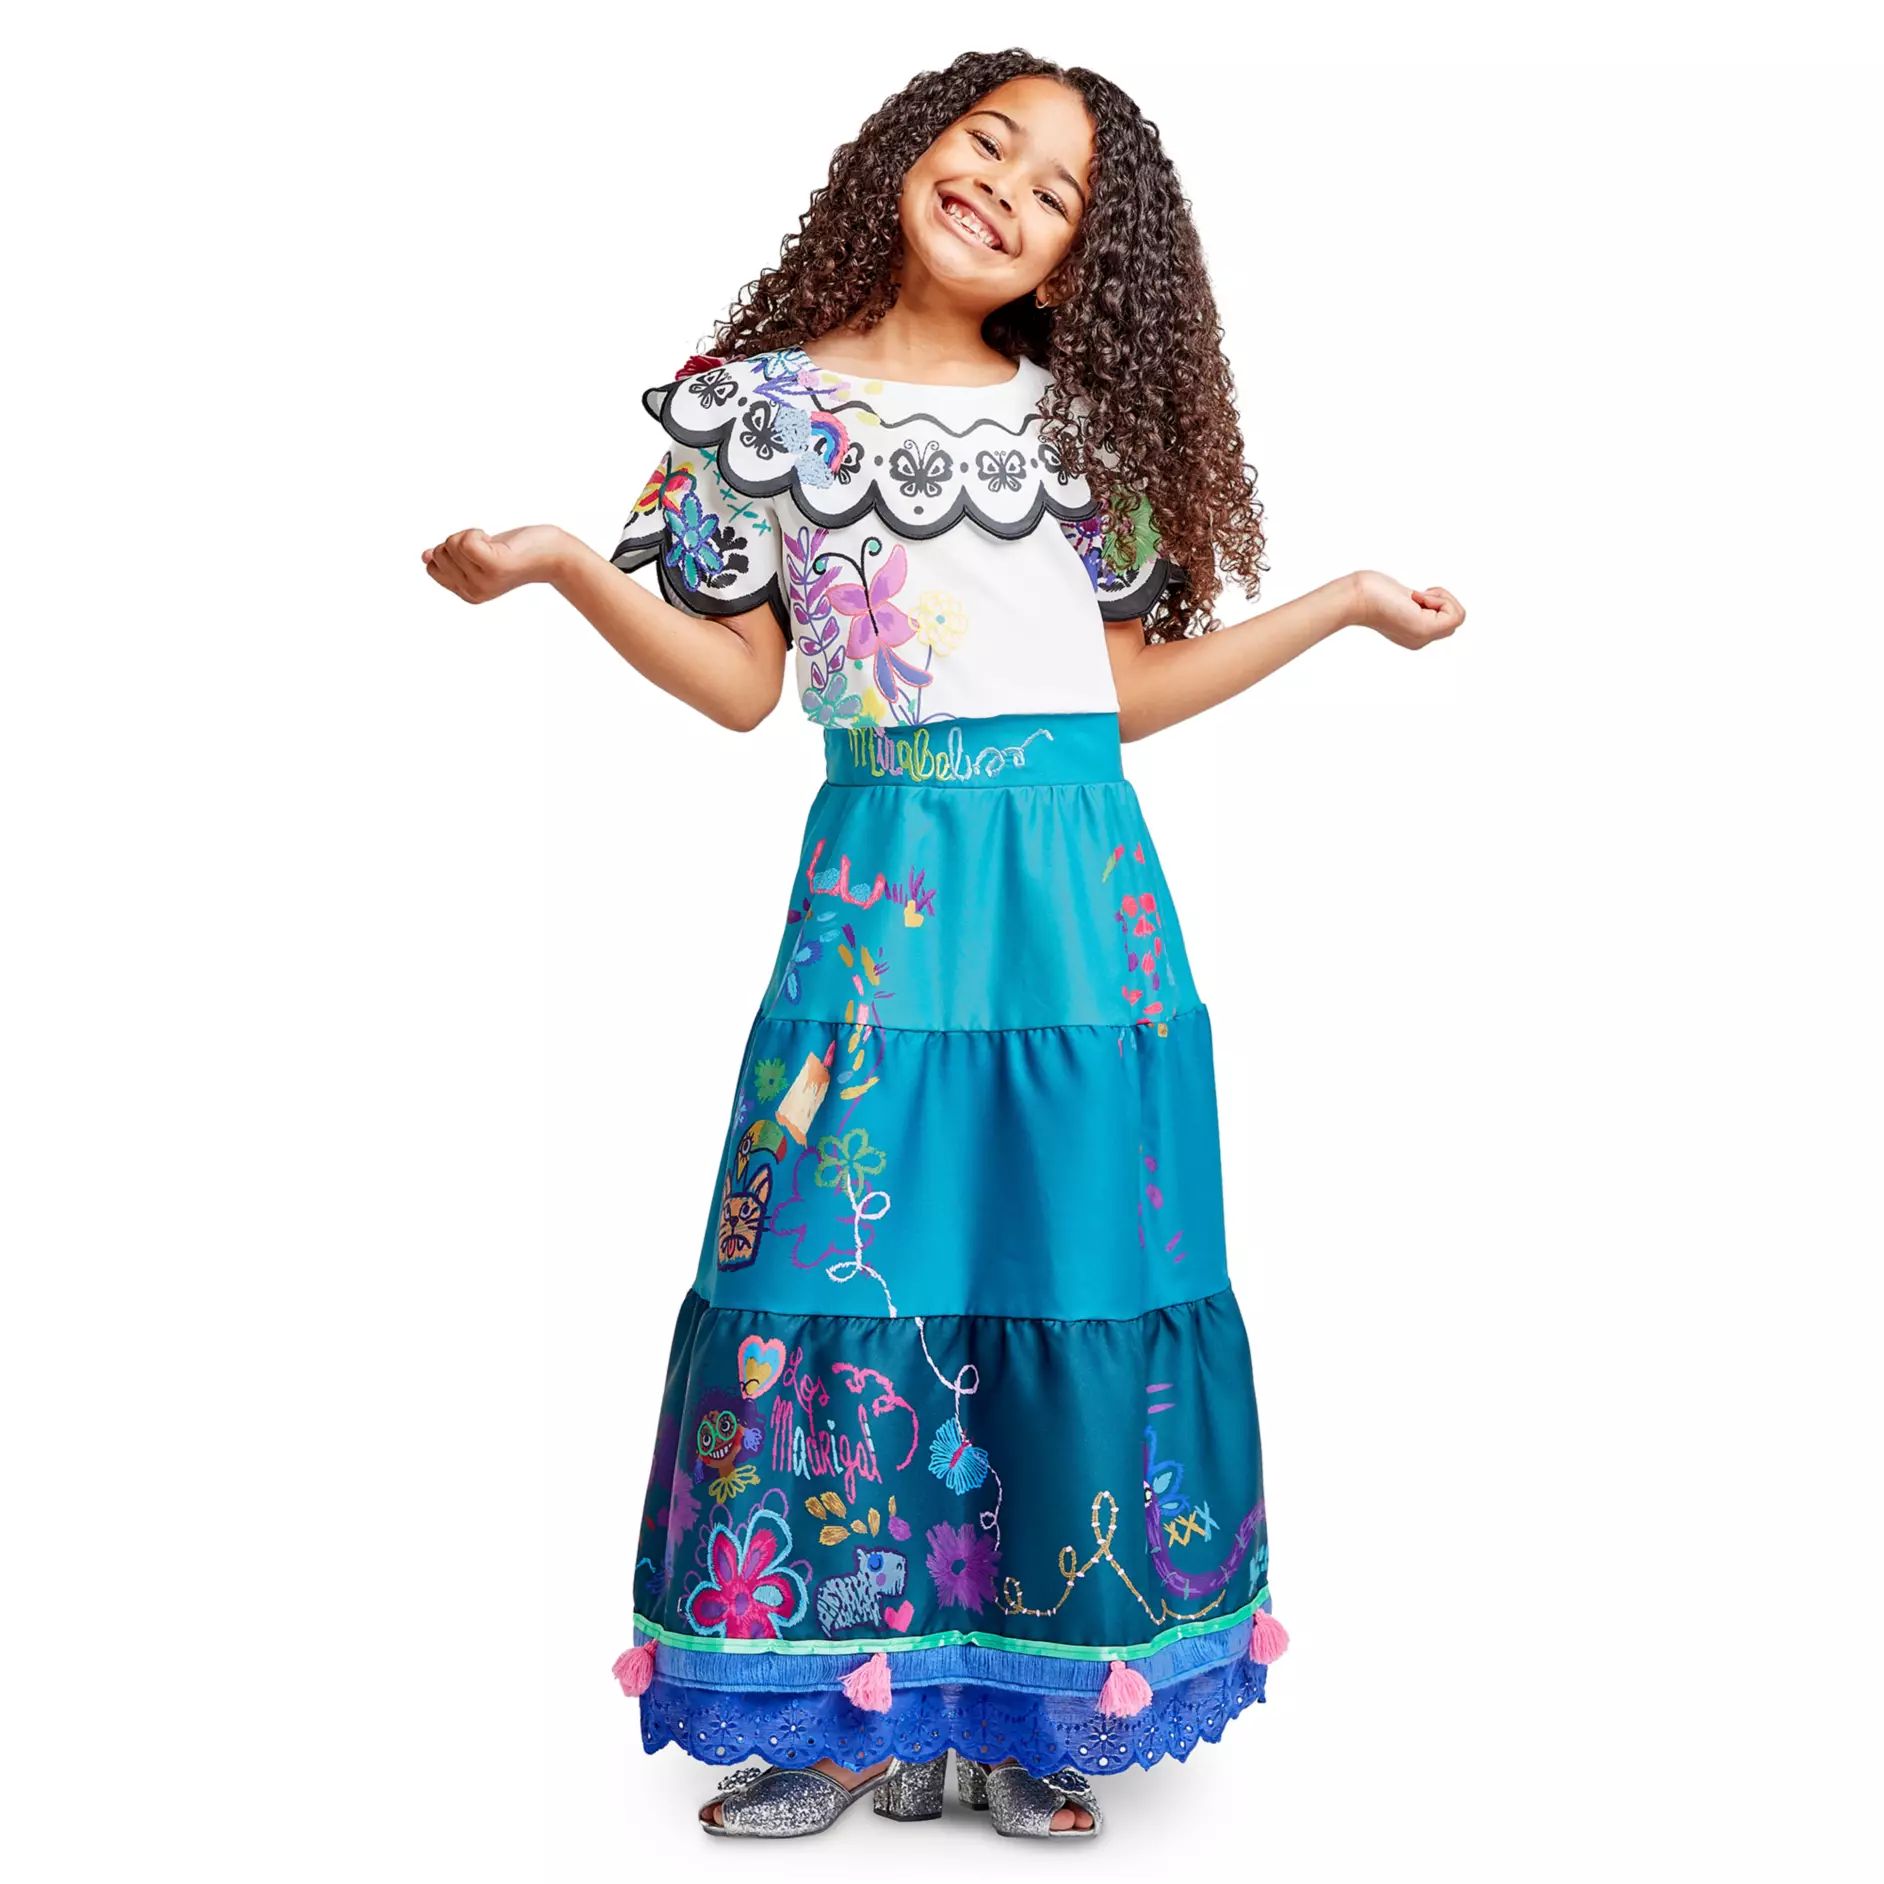 Mirabel Costume for Kids – Encanto | Disney Store